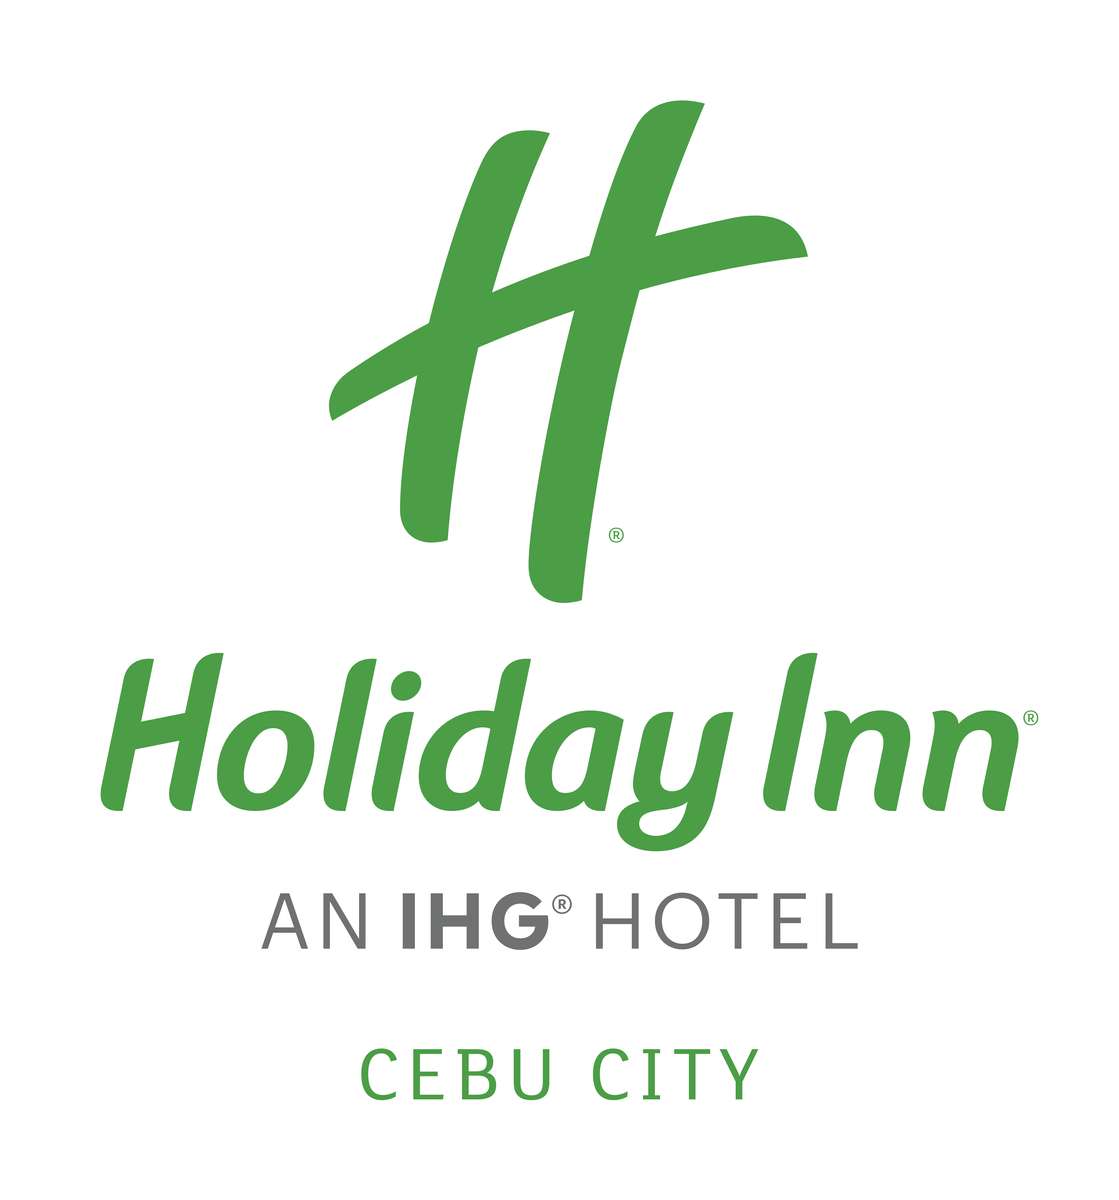 Hotel Holiday Inn puzzle online a partir de fotografia